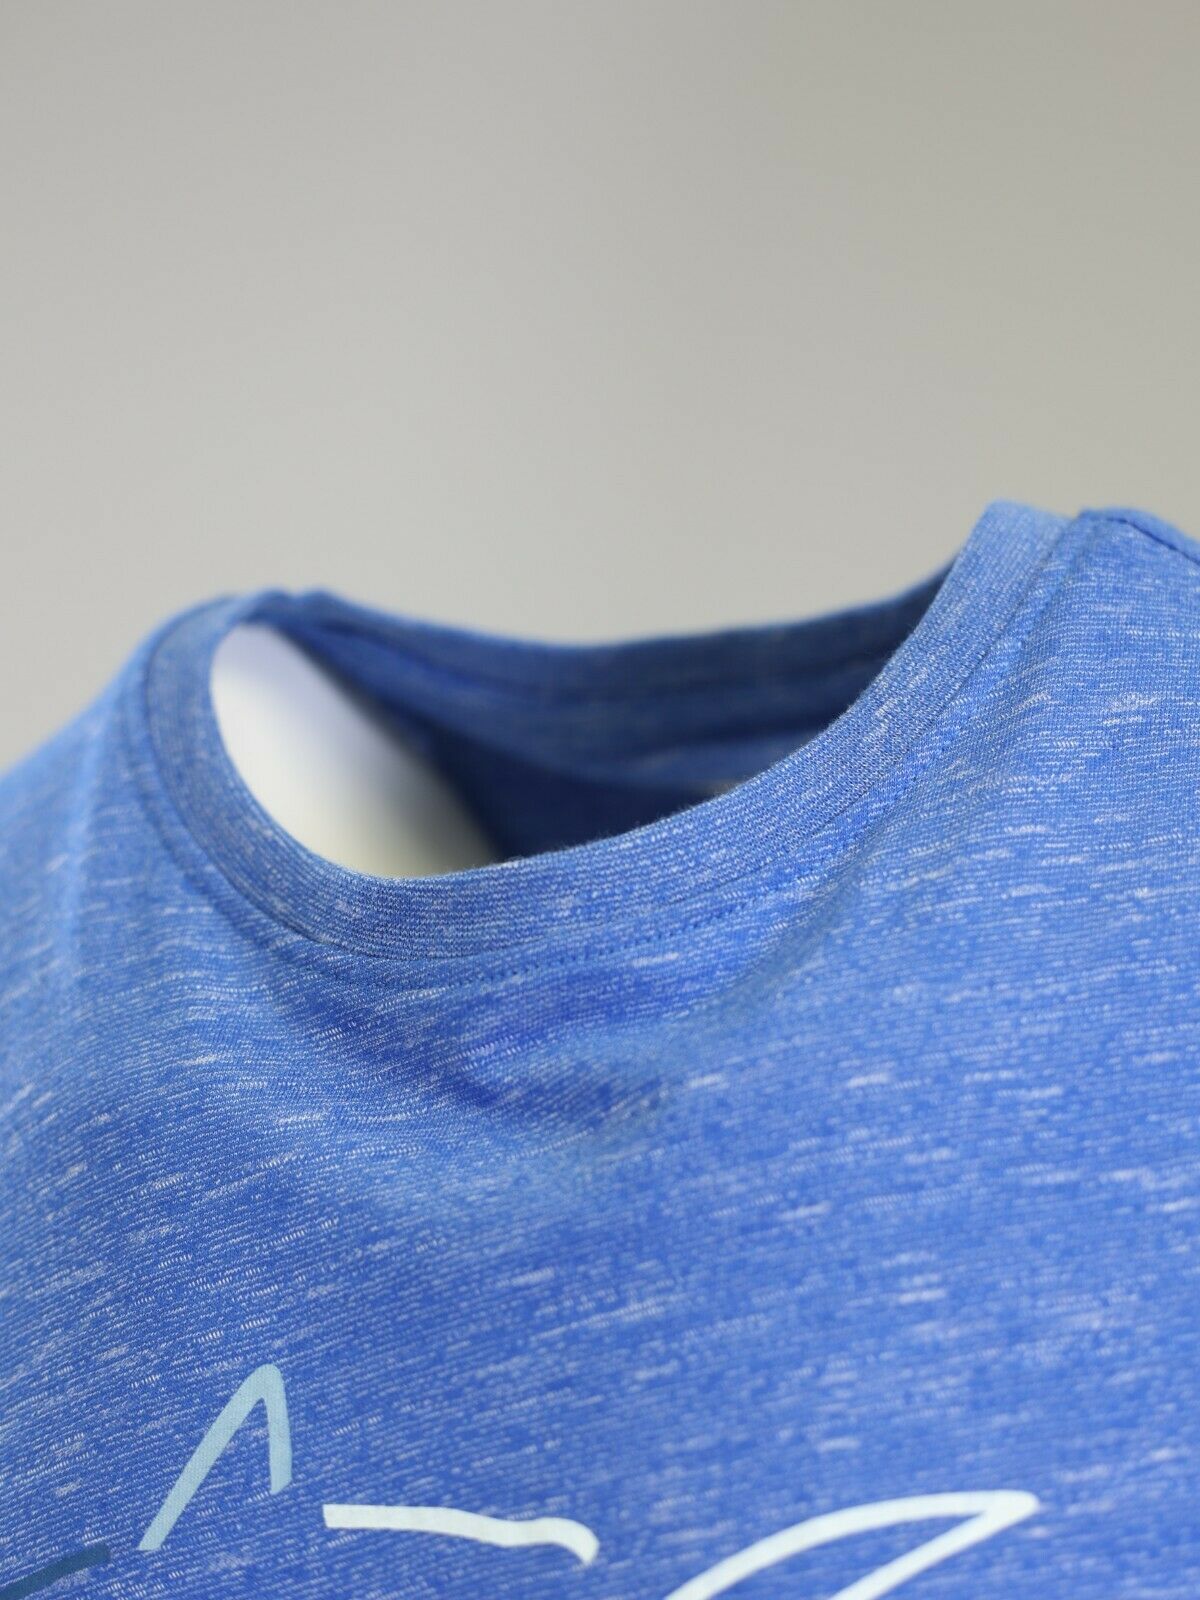 Greg Norman Men's Heather Sea Blue Big Logo S/S T-Shirt (S02)